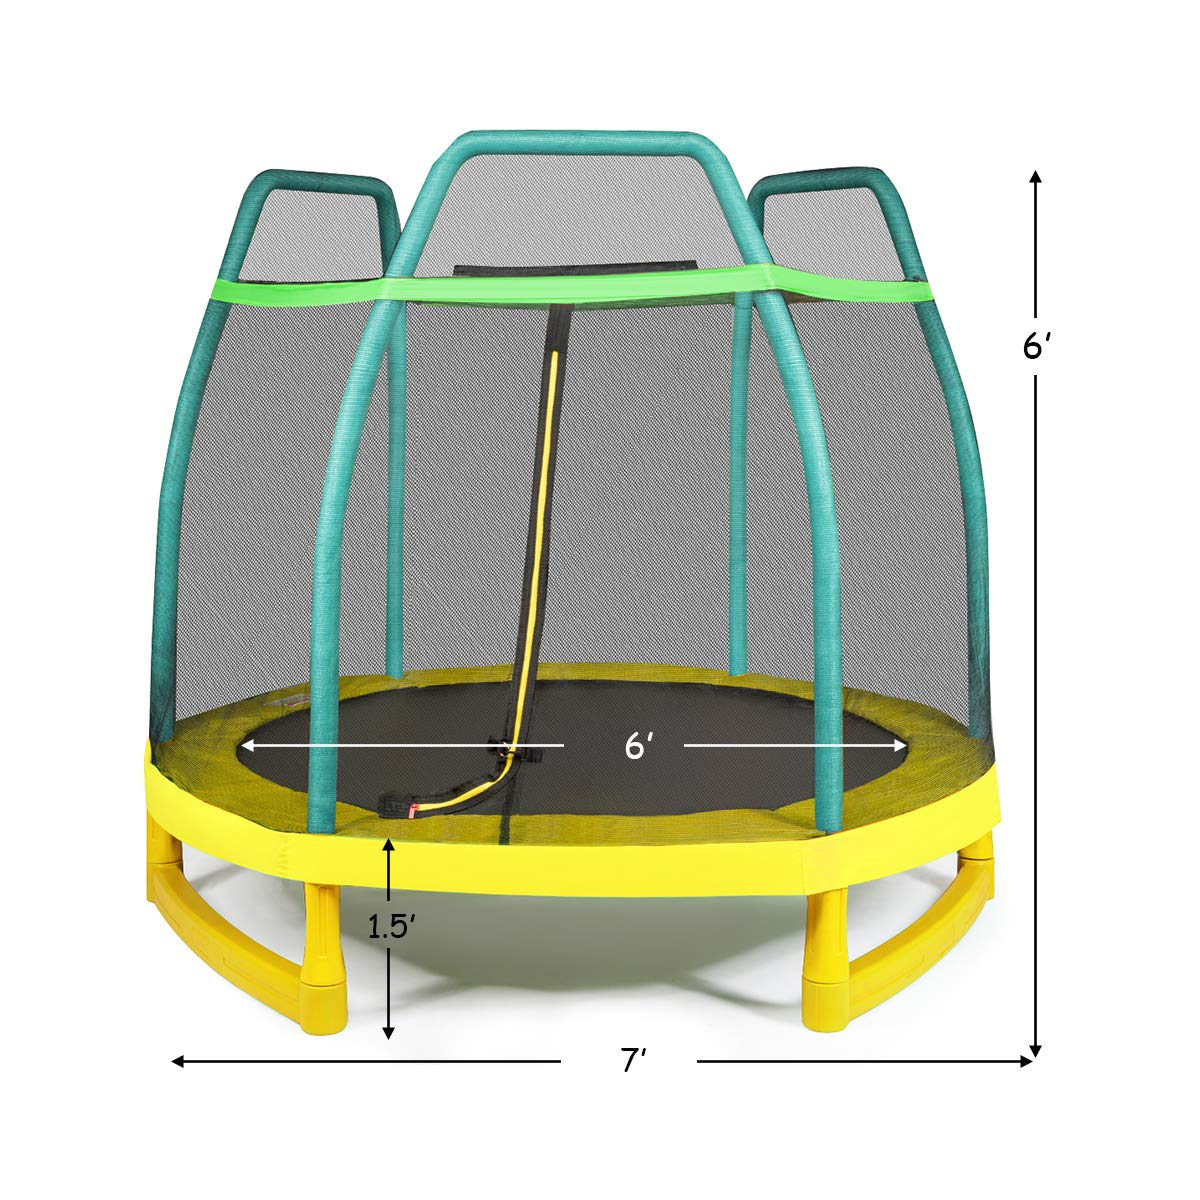 Giantex 7 Ft Kids Trampoline w/Safety Enclosure Net